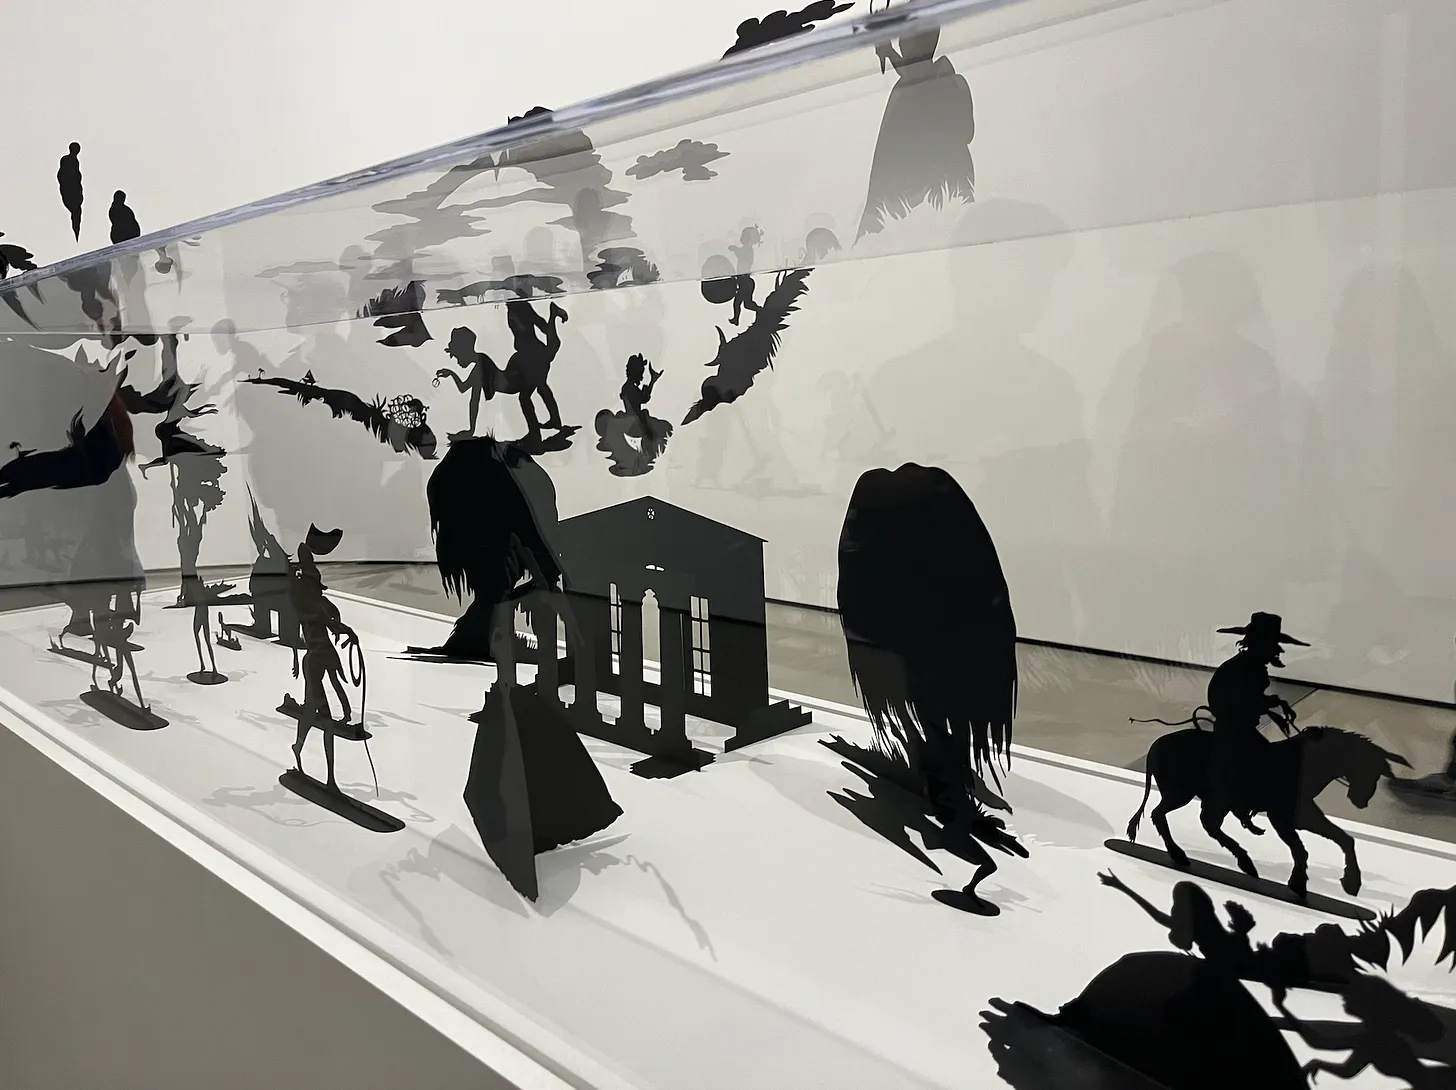 paper cut paper silhouettes by the artist kara walker (NSFW)